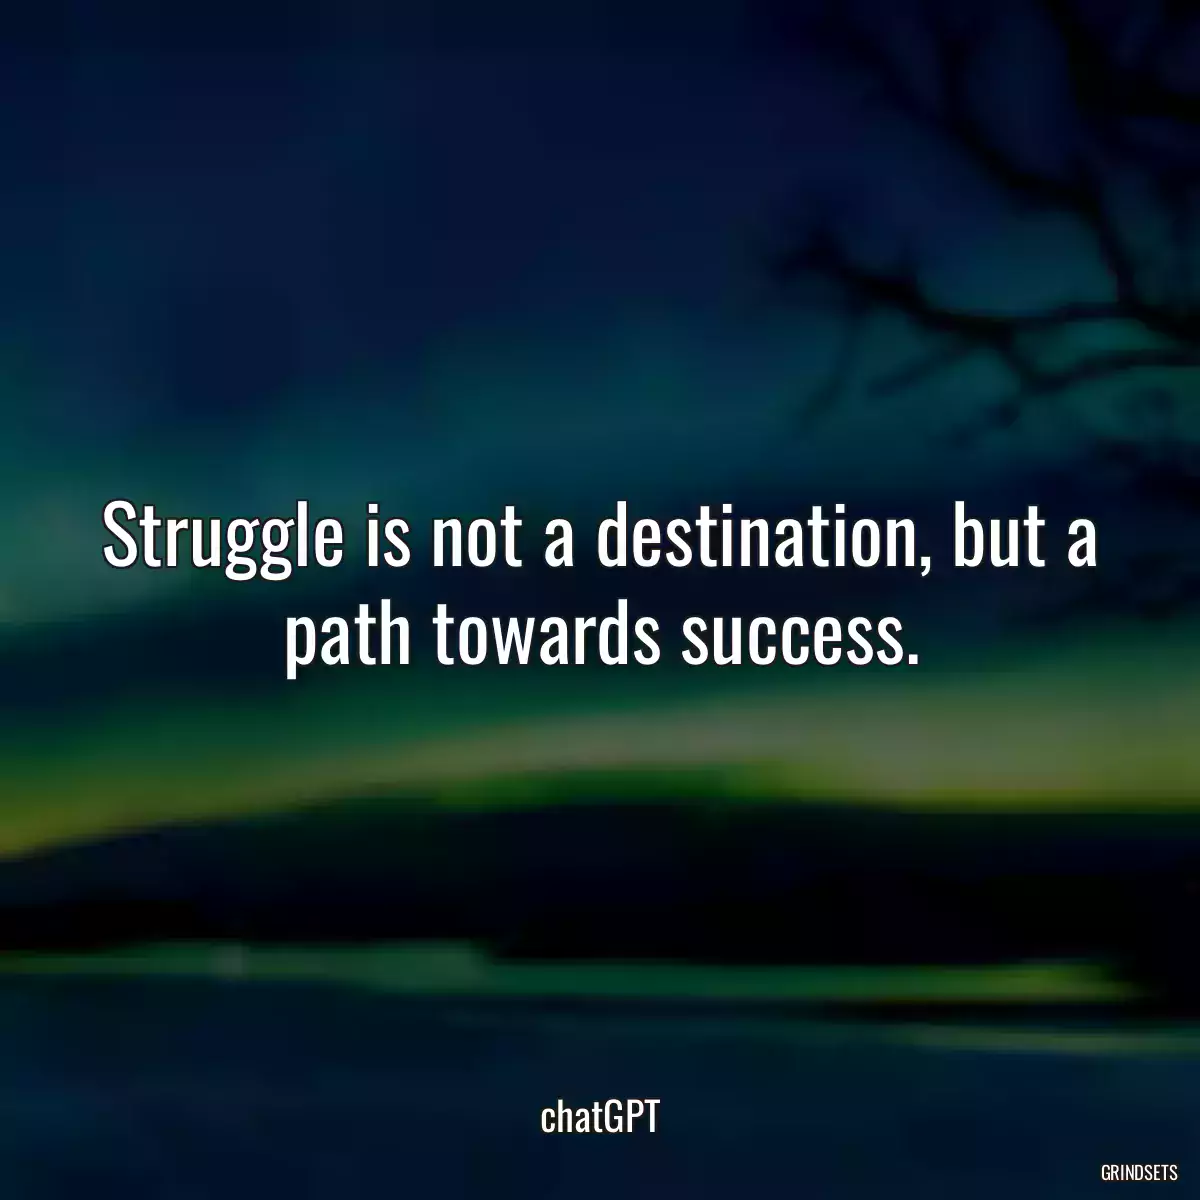 Struggle is not a destination, but a path towards success.